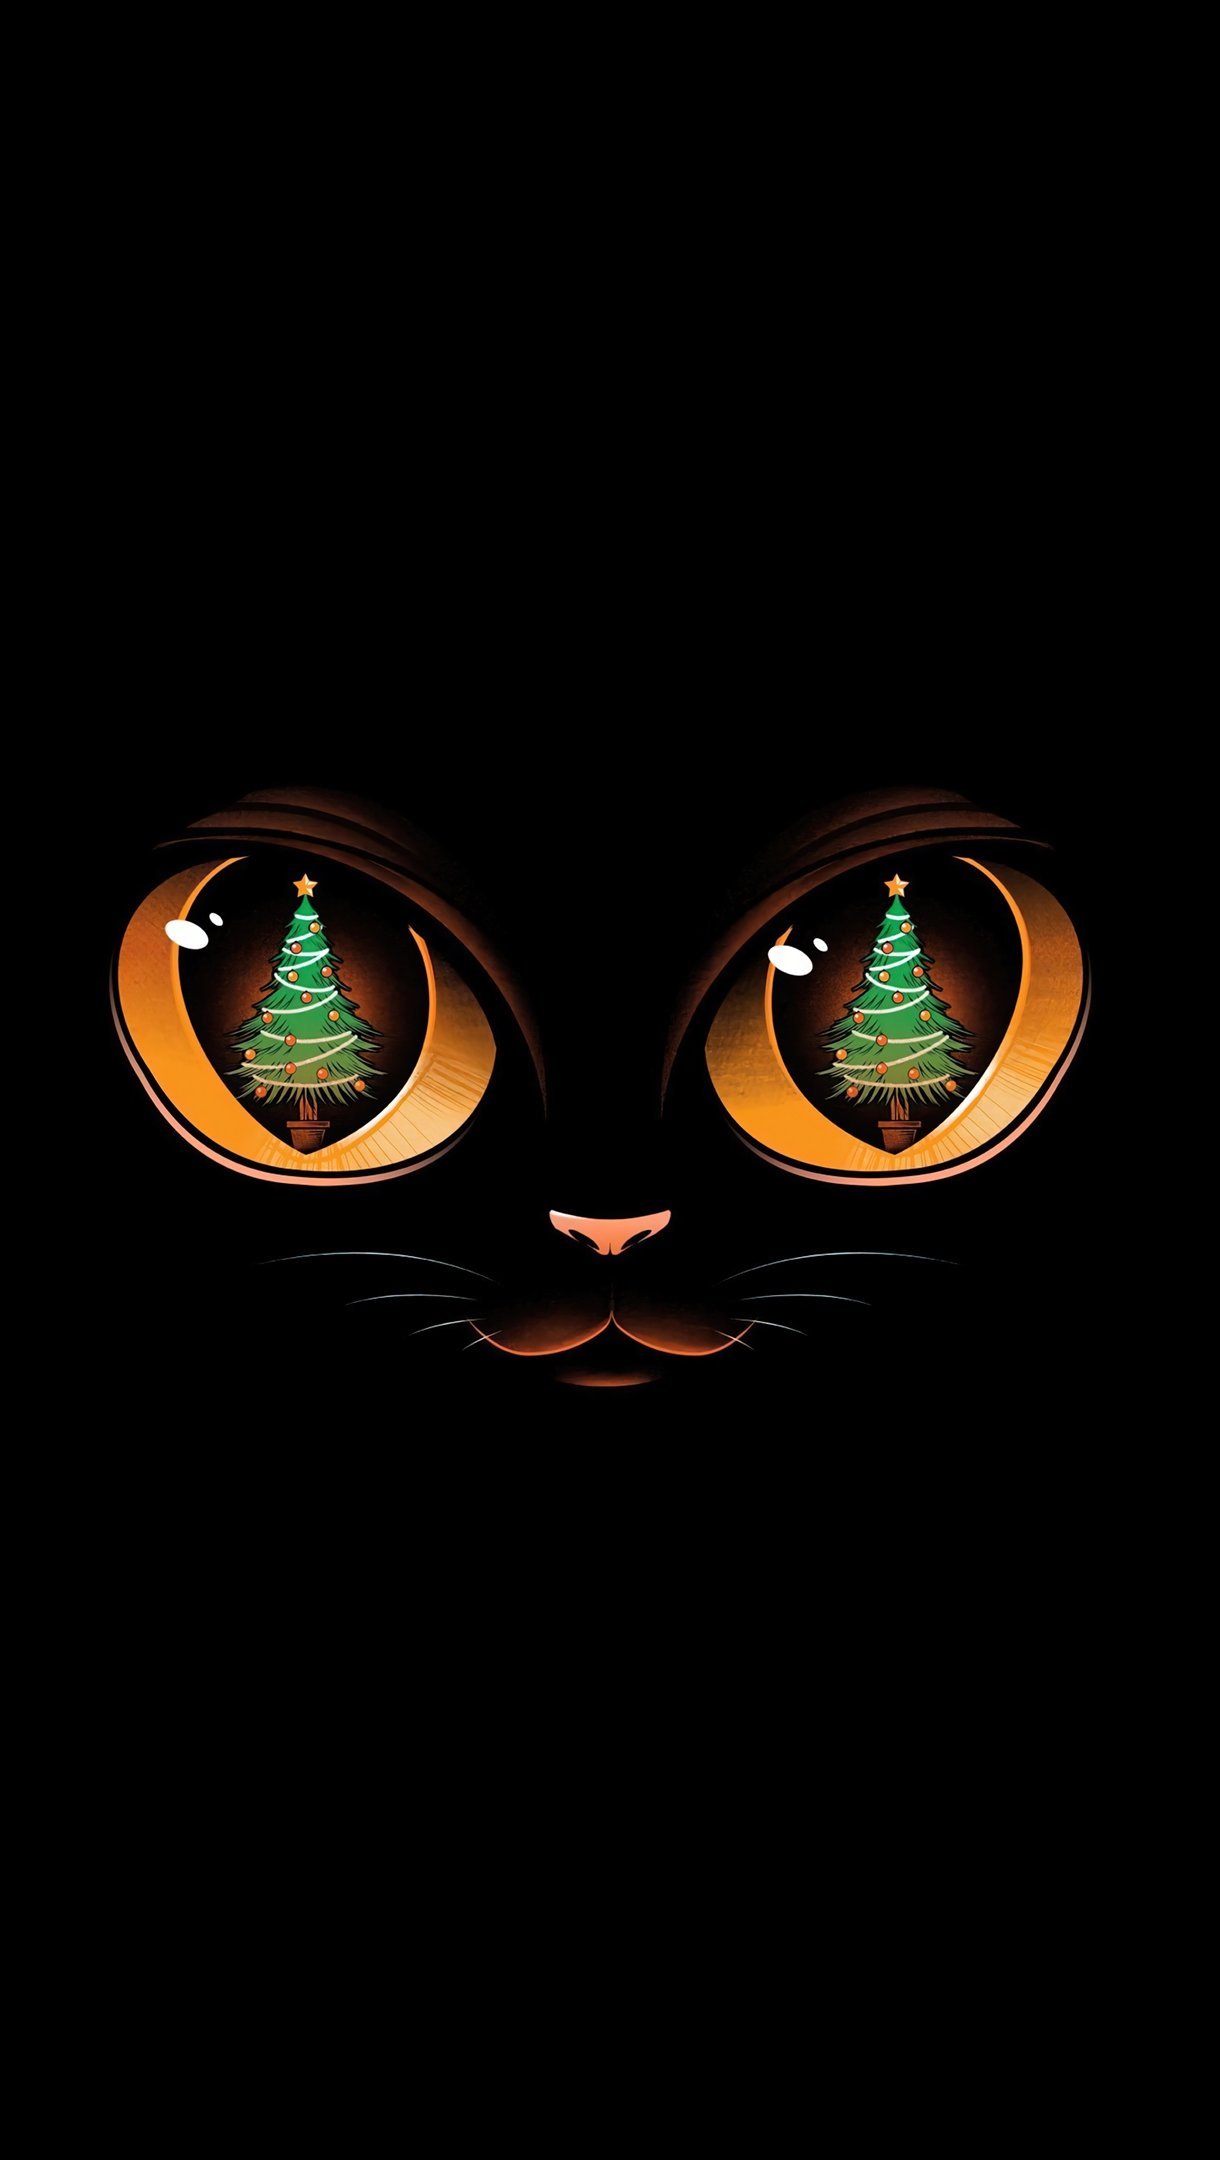 Wallpaper Christmas Black Cat Vertical